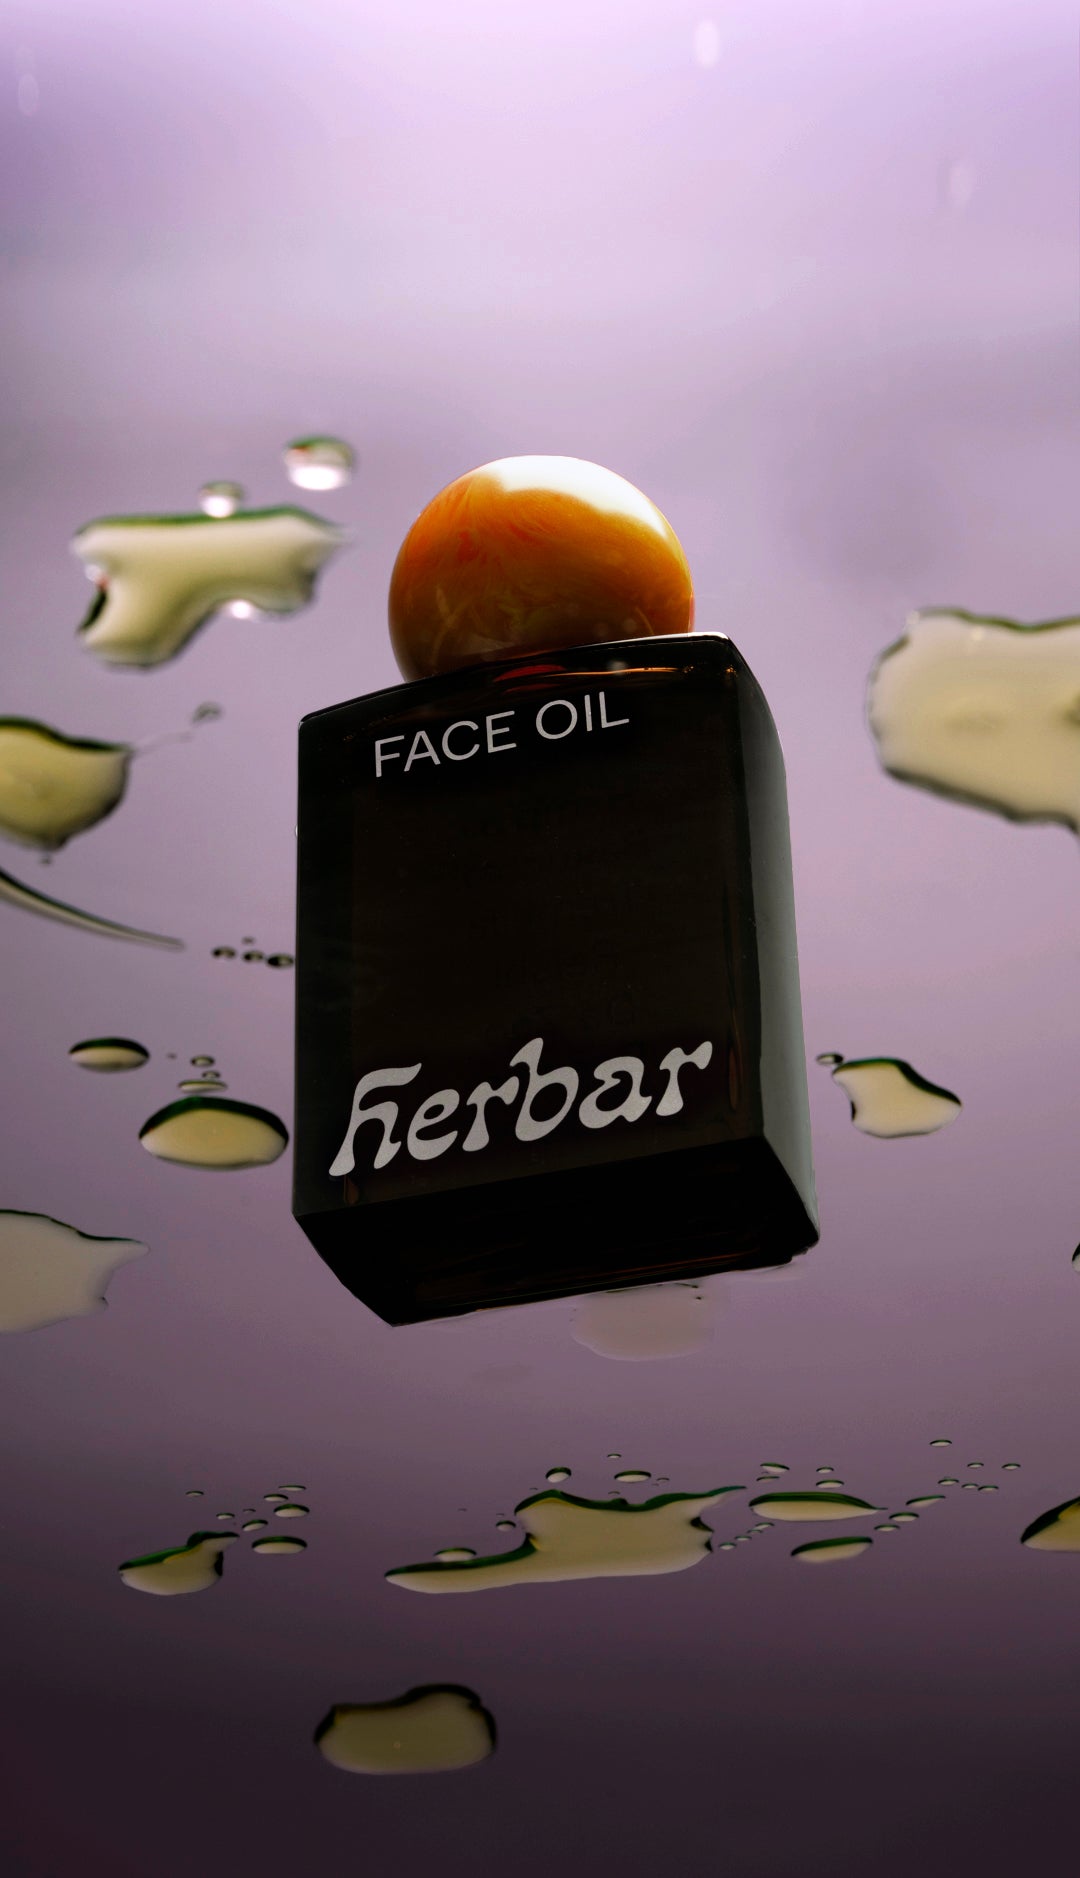 The Face Oil Herbar